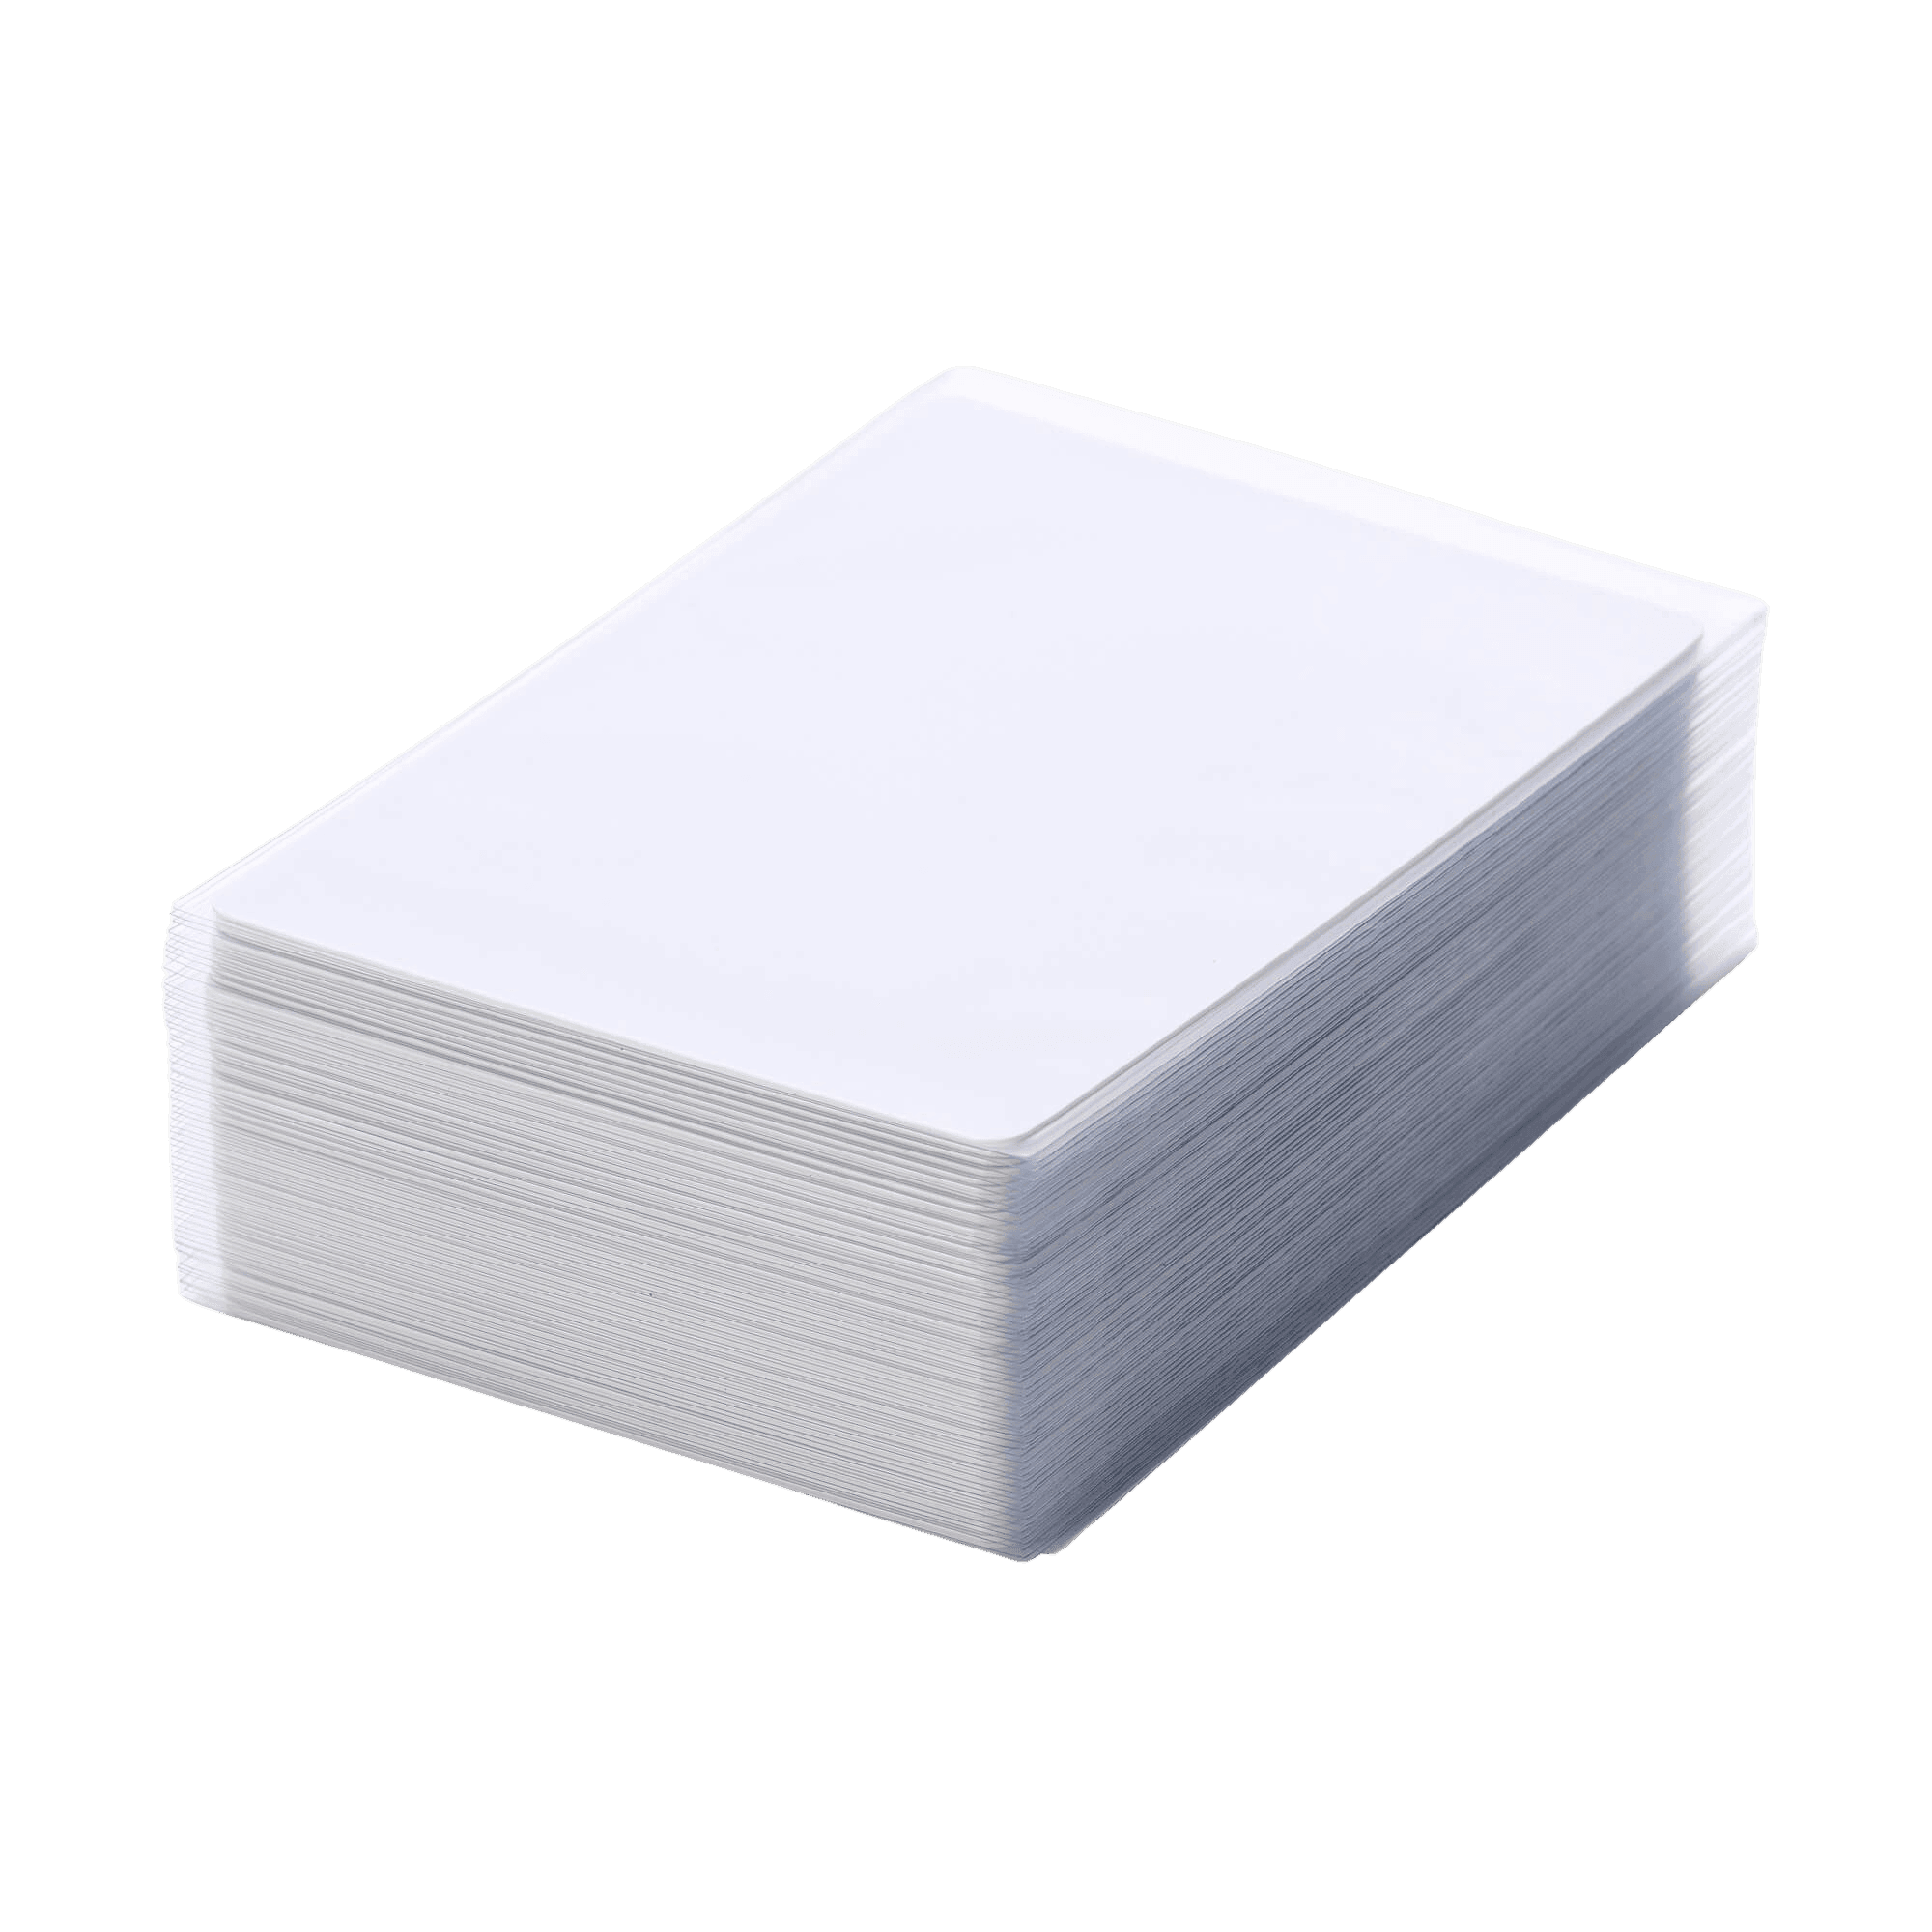 Vault X Soft Card Sleeves (200 Pack) - The Card Vault